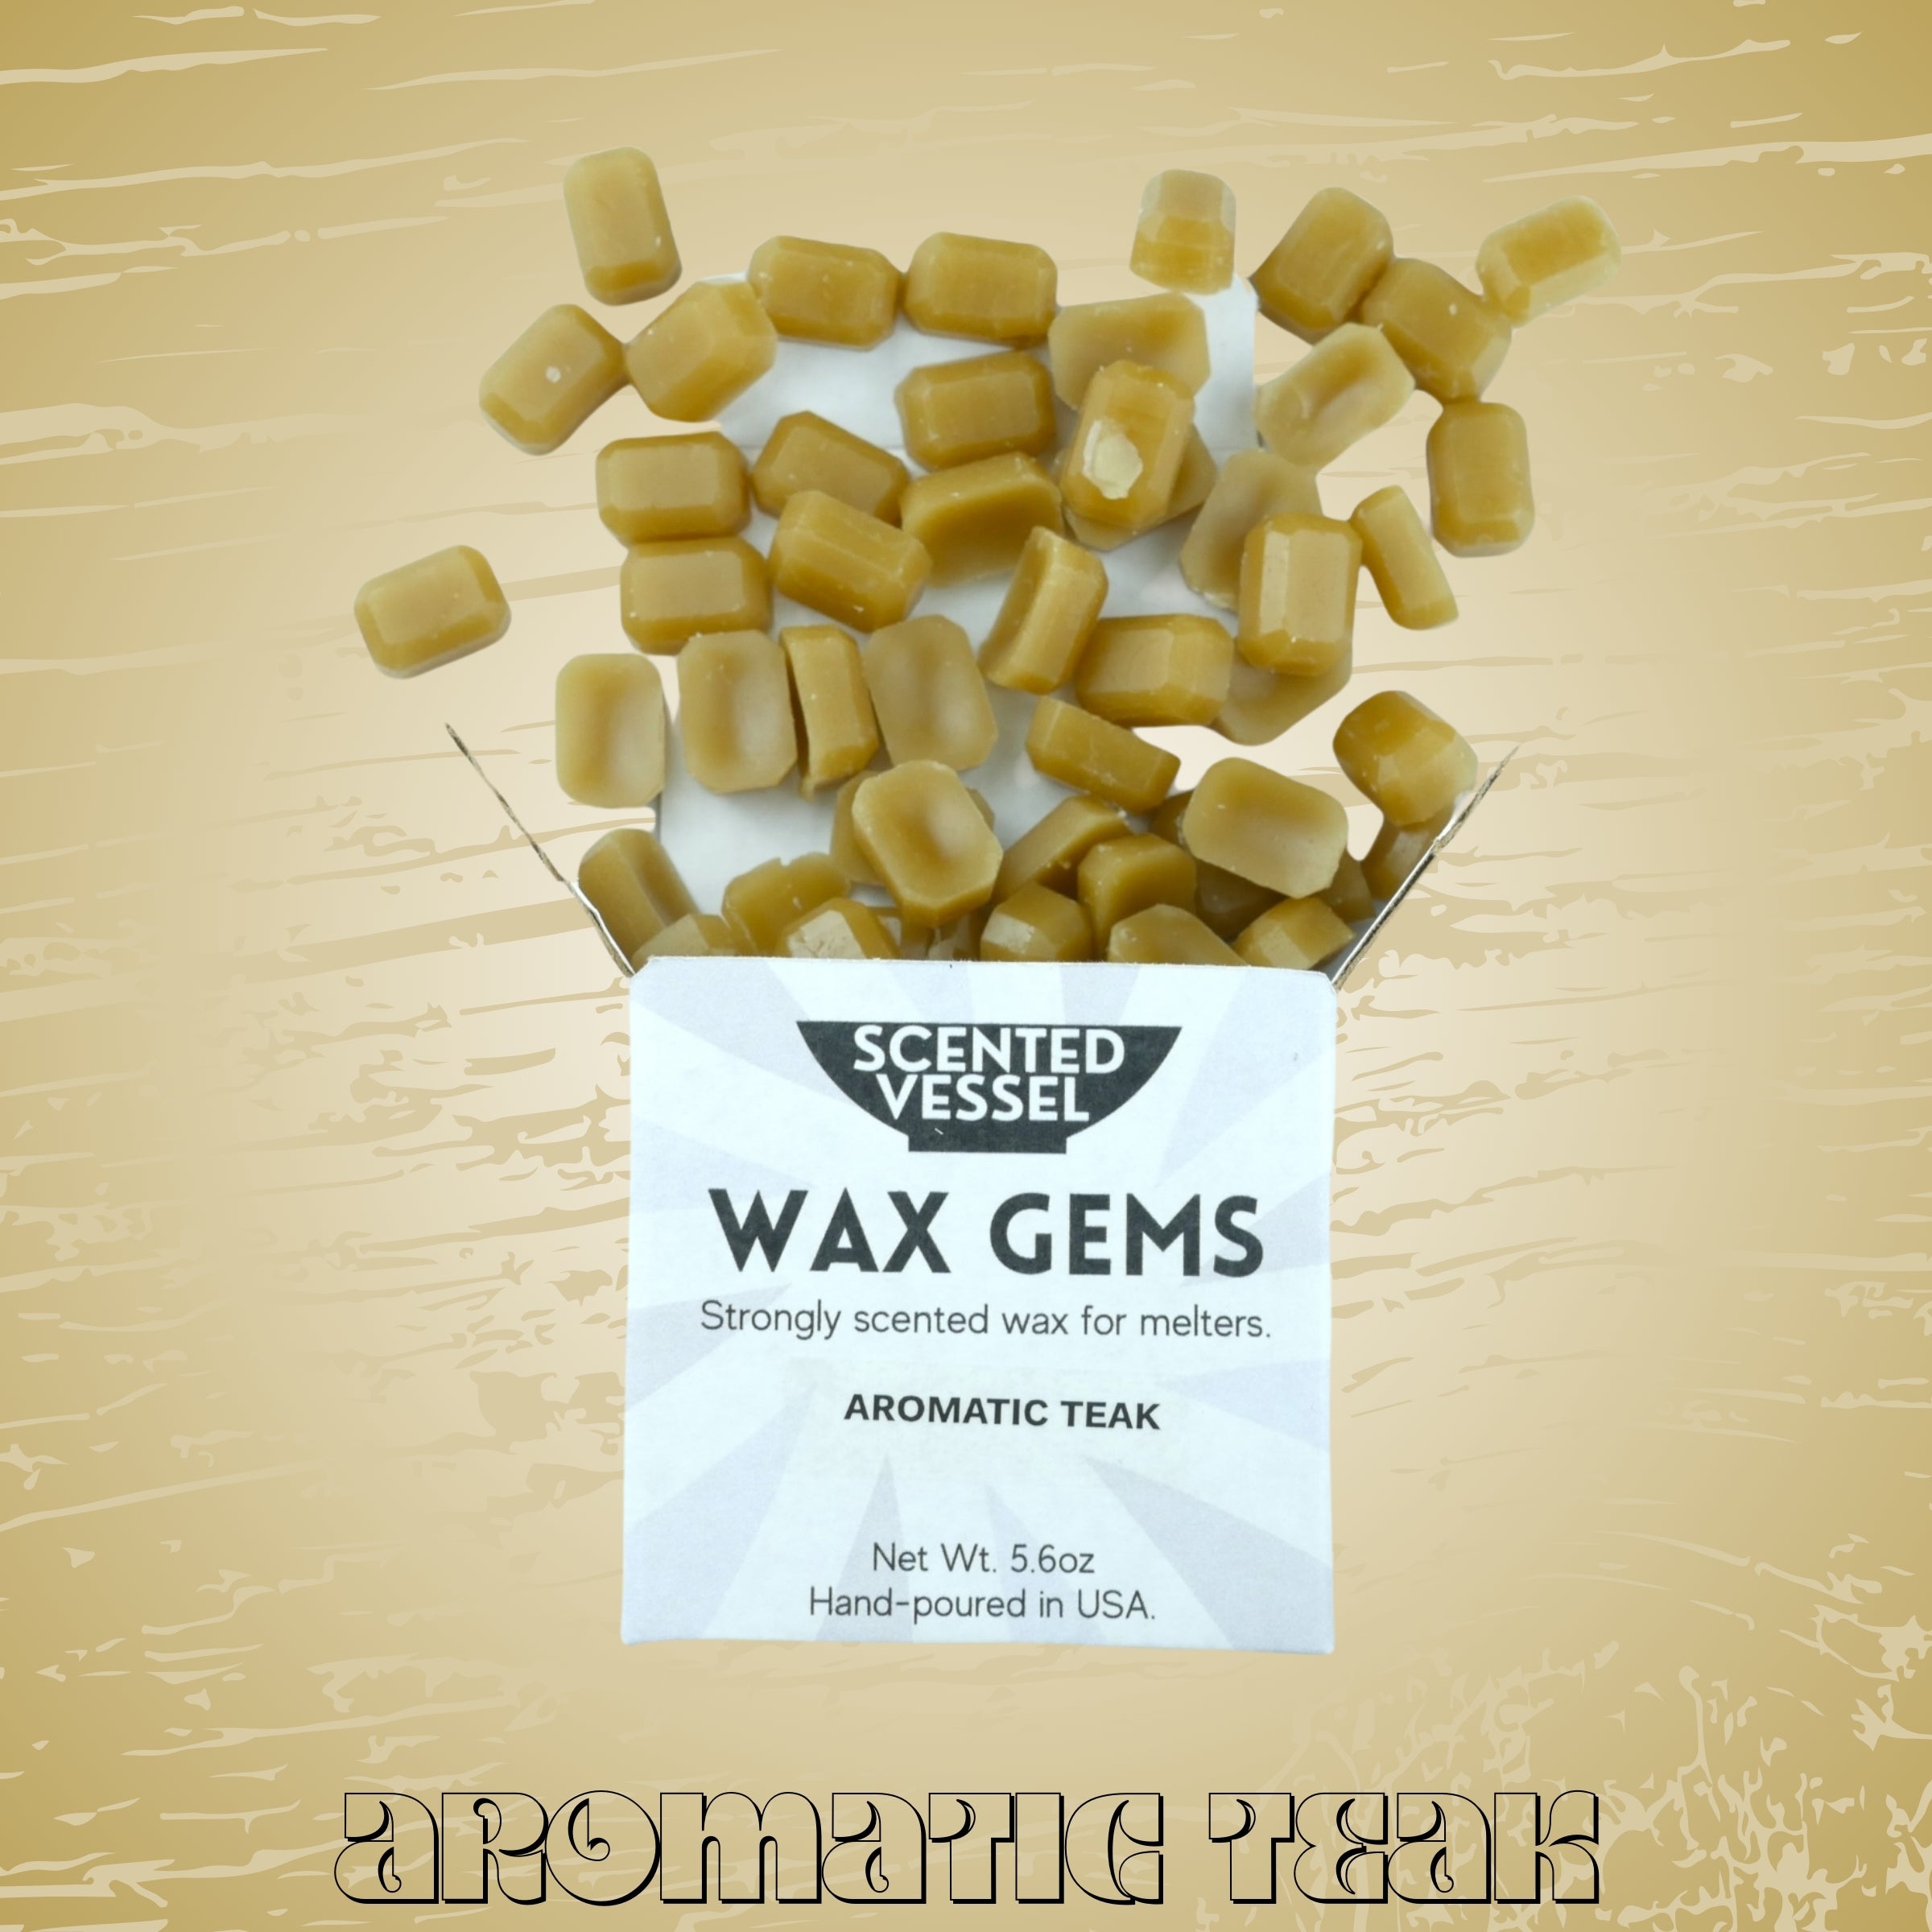 Aromatic Teak 5.6oz Wax Gems by Scented Vessel